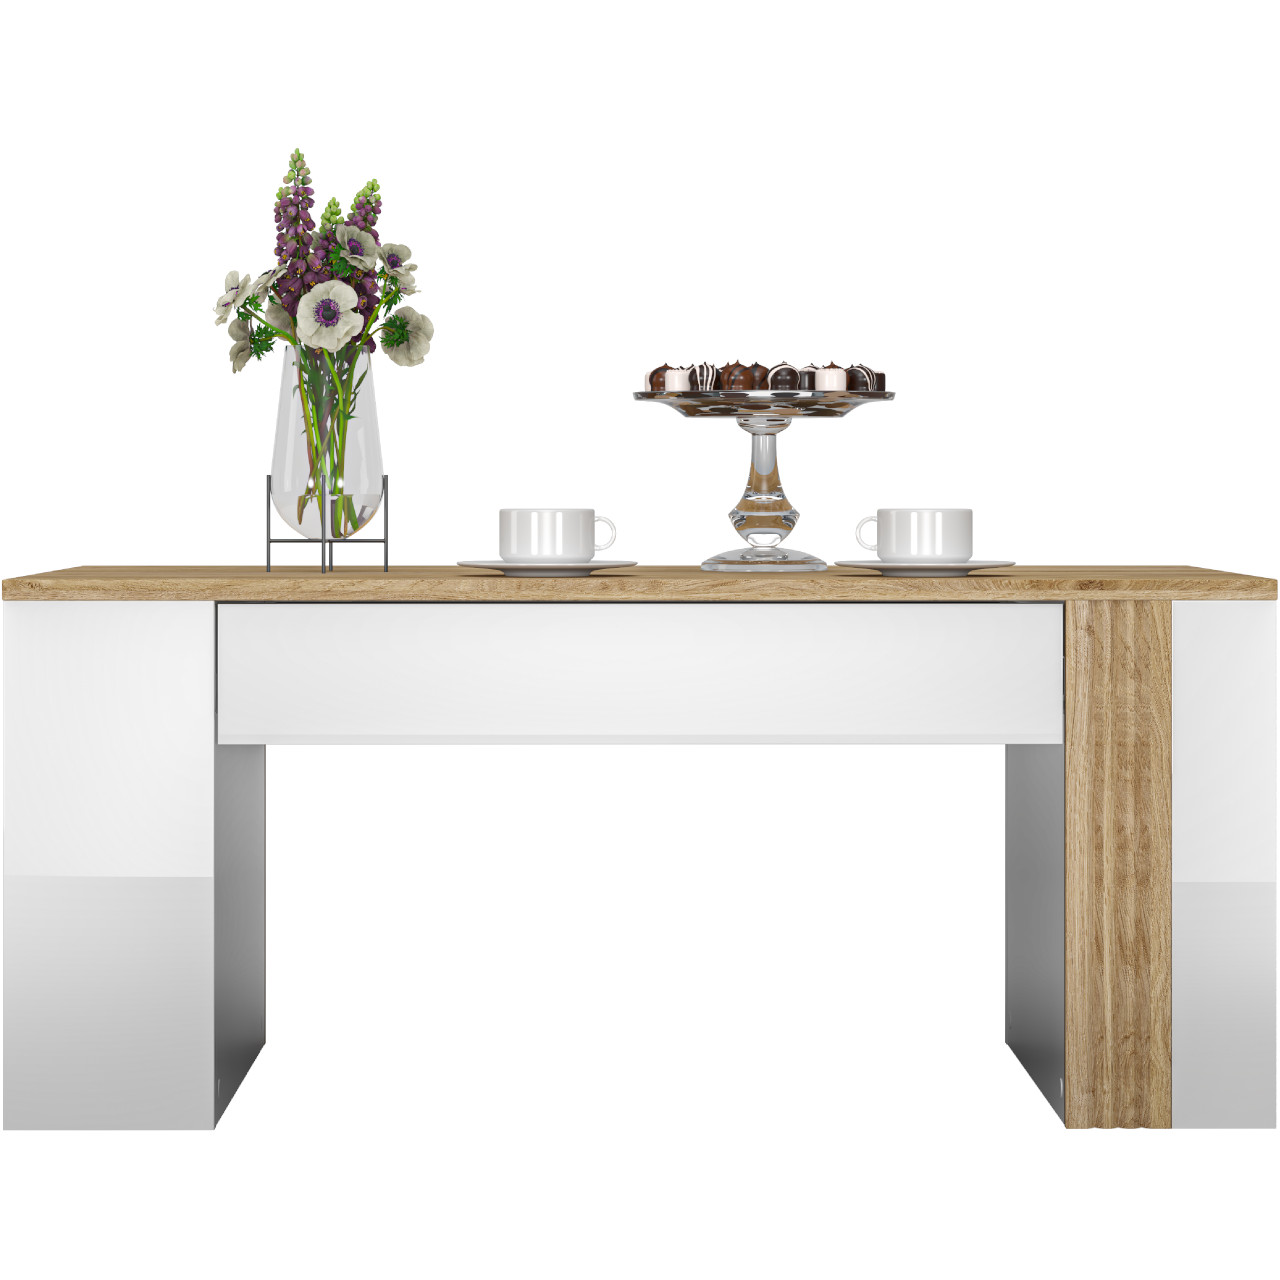 Coffee table FLORES FS10 castello oak / white gloss